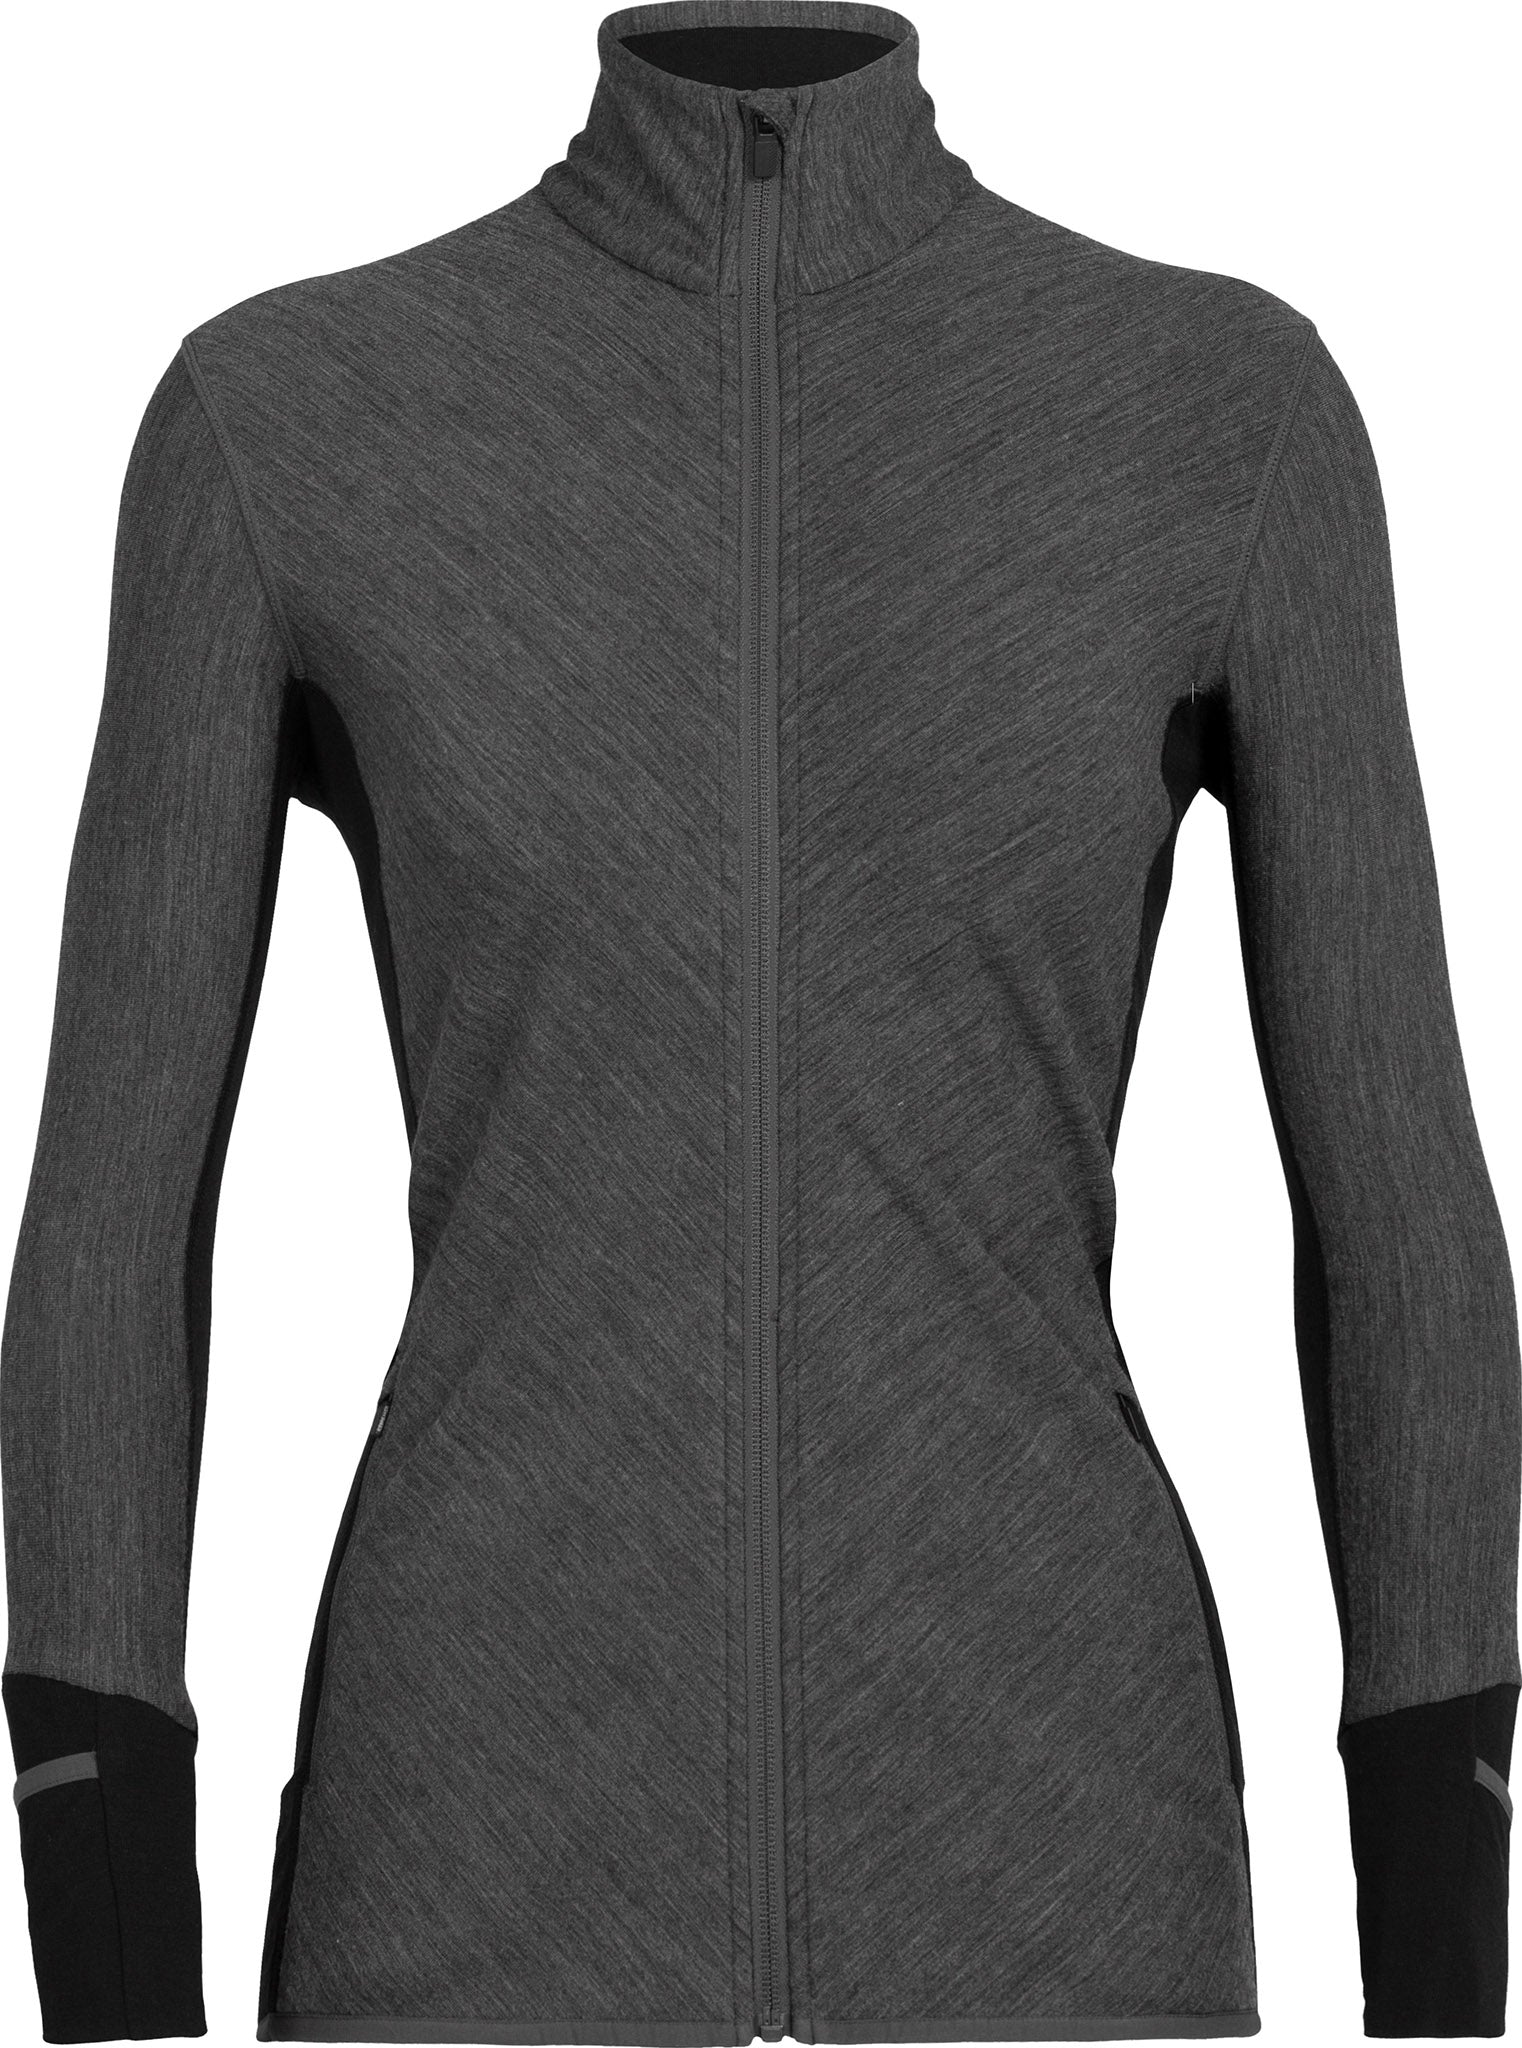 Icebreaker EXP women's gray 100% Merino Wool Full Zip Jacket Size